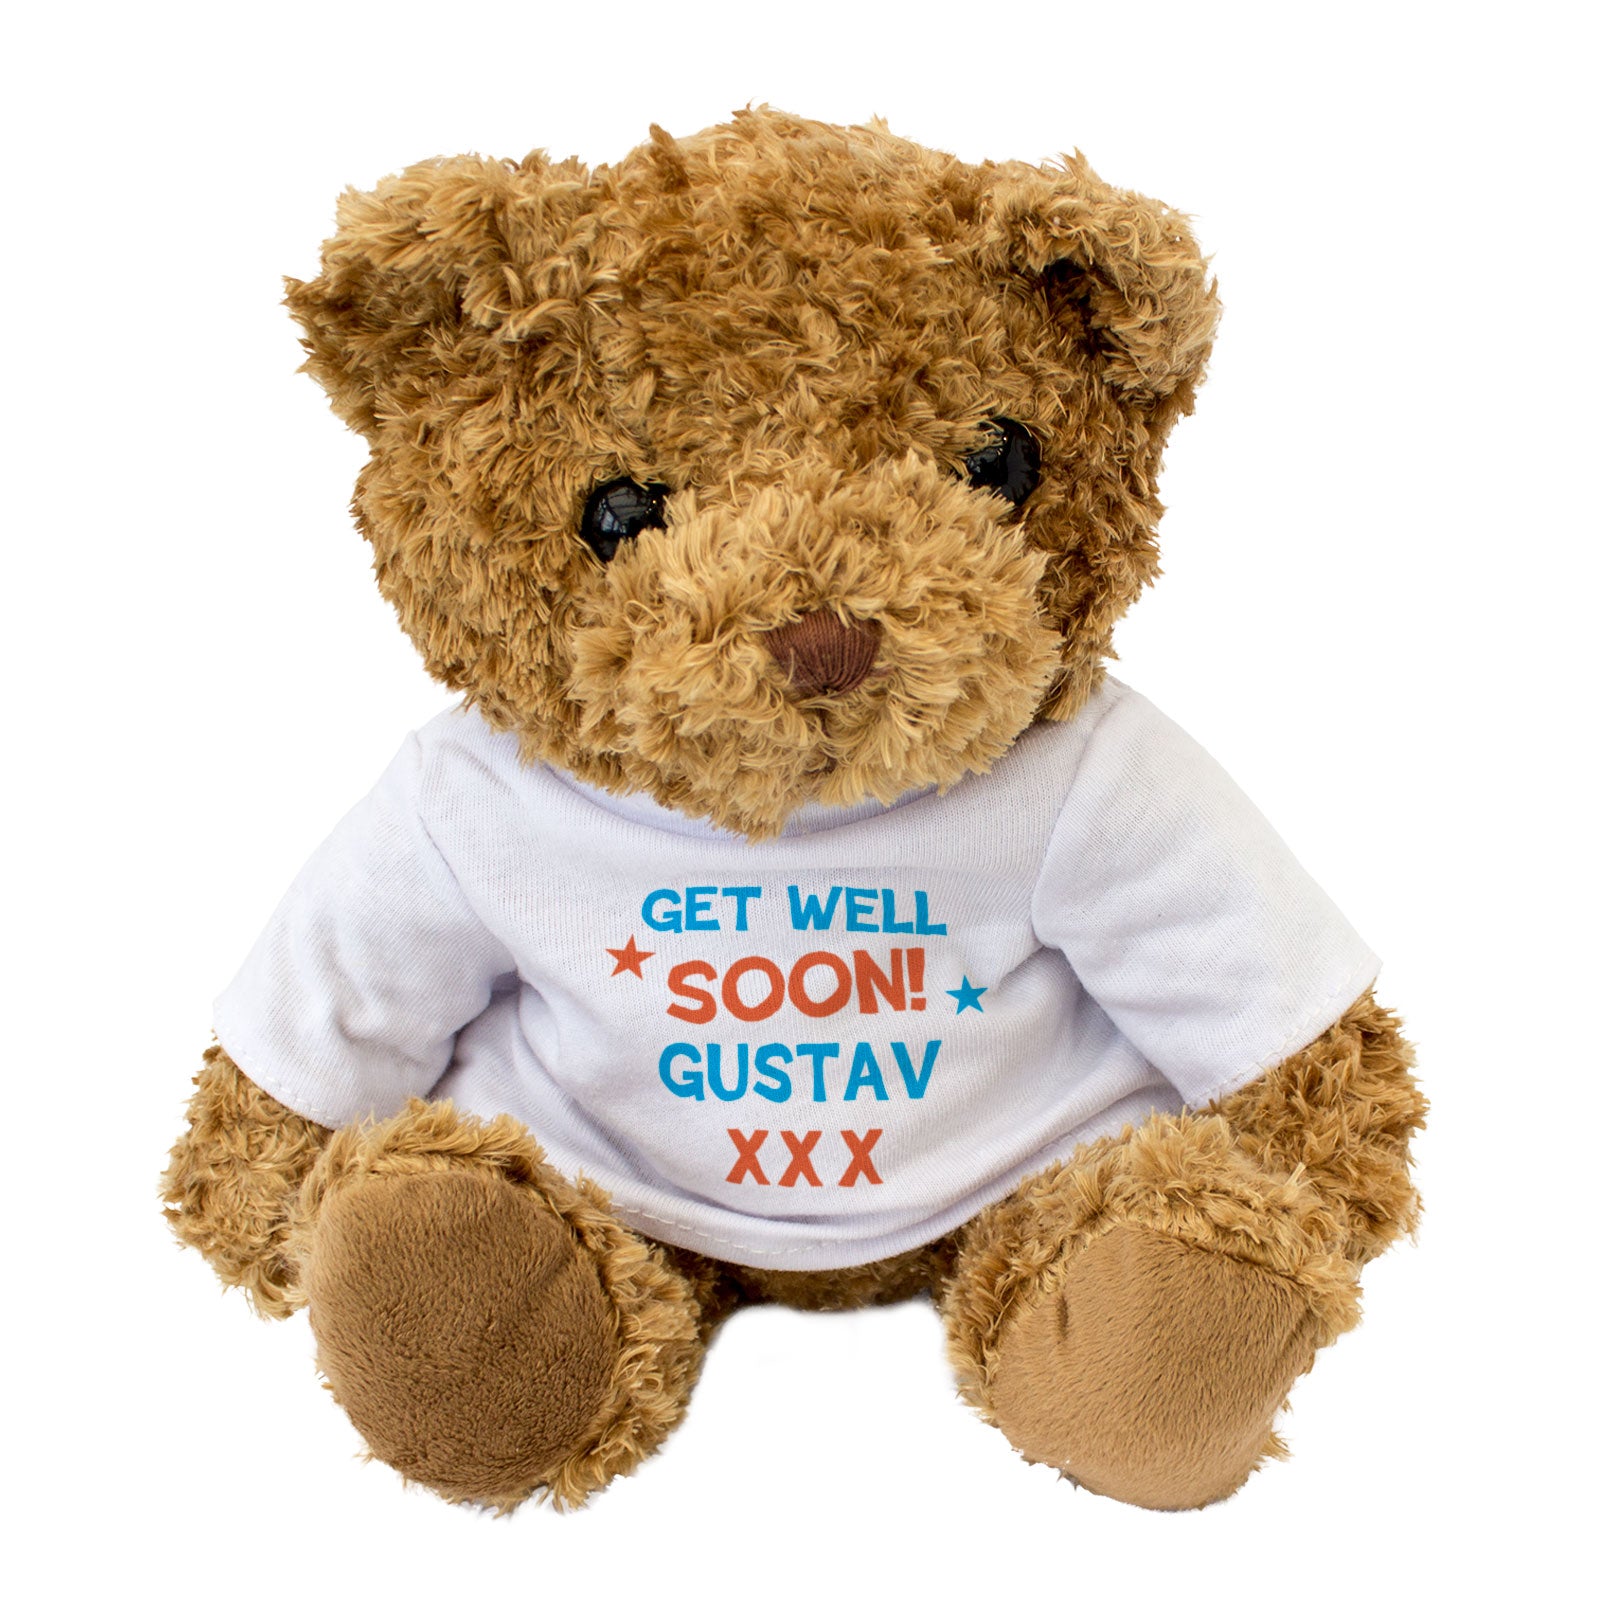 Get Well Soon Gustav - Teddy Bear